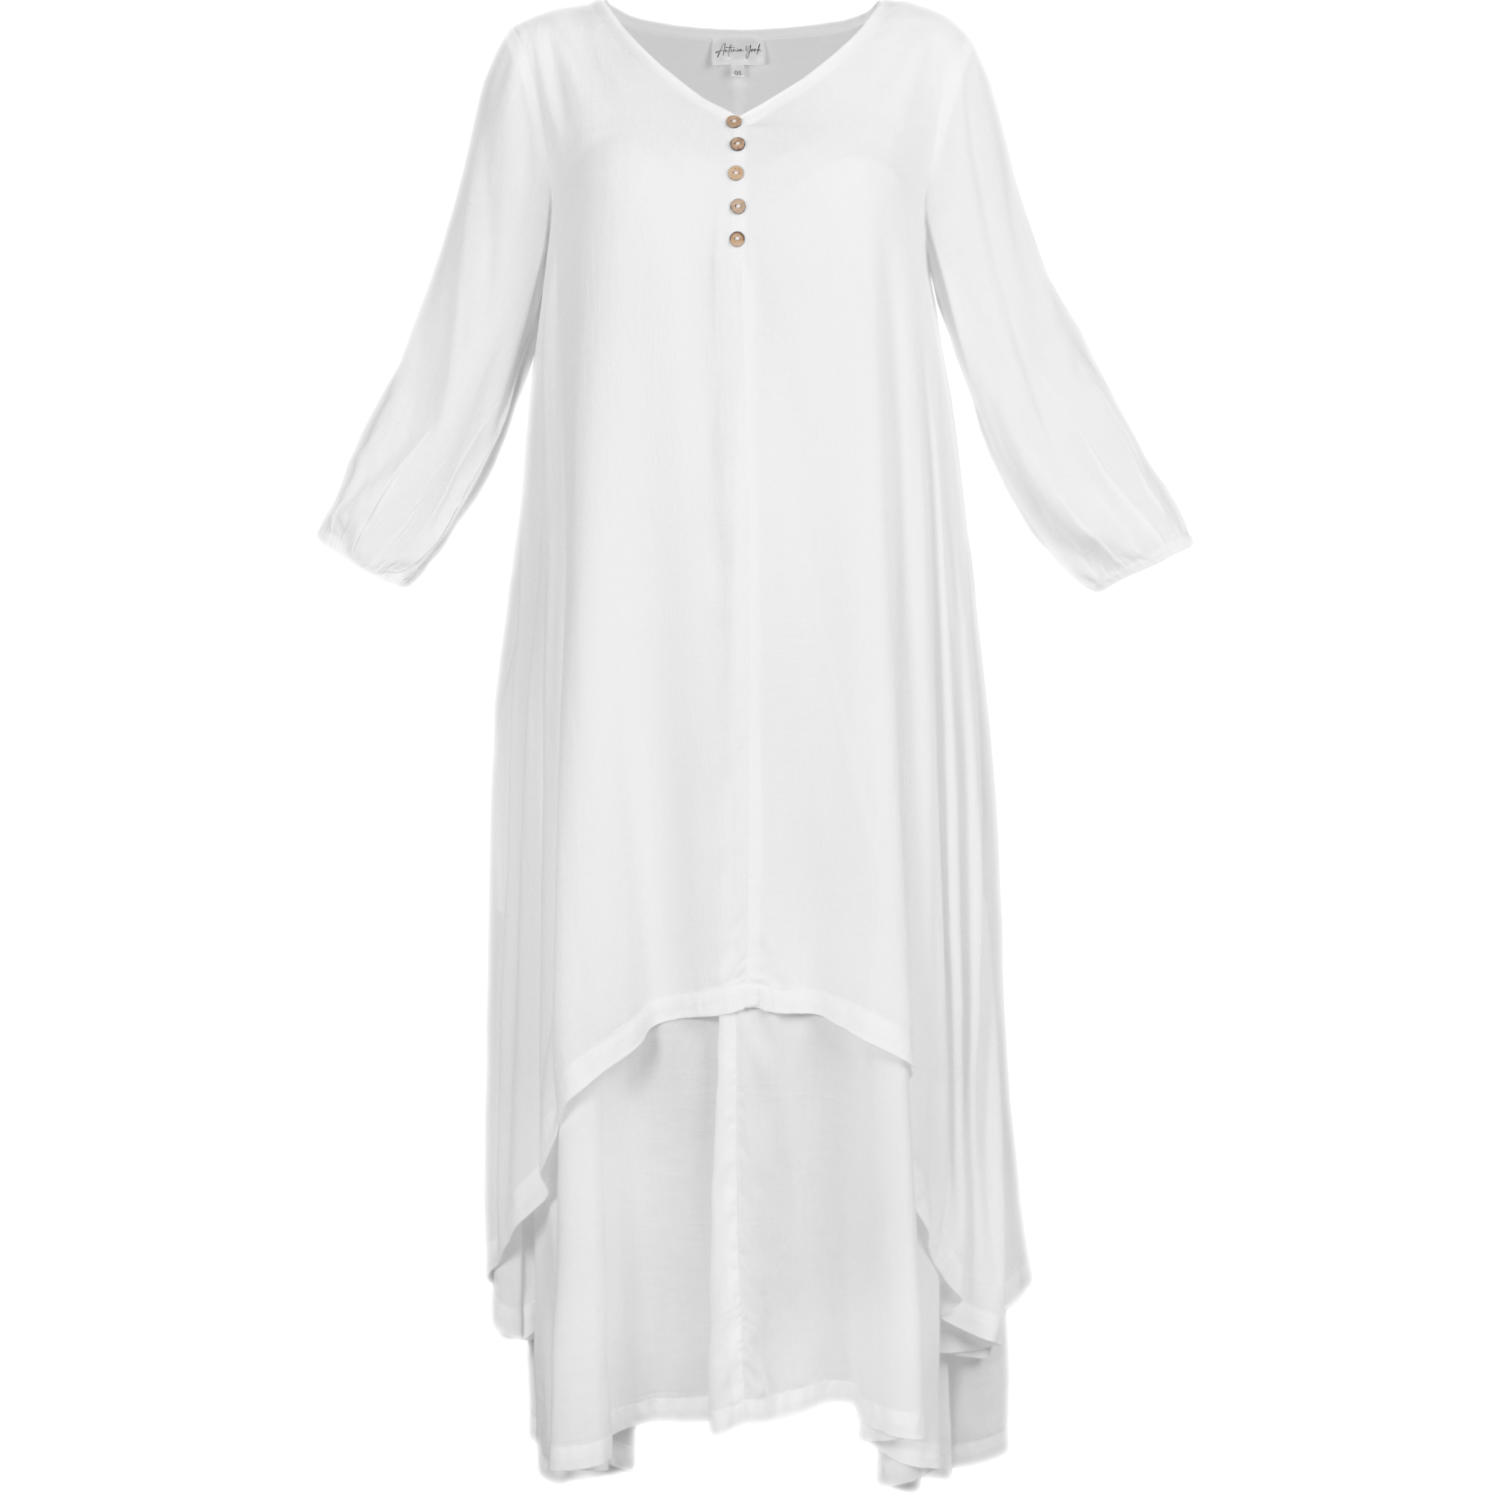 Women’s Layered Dress Chelsea White Floaty Comfortable Feminine Dress One Size Antonia York